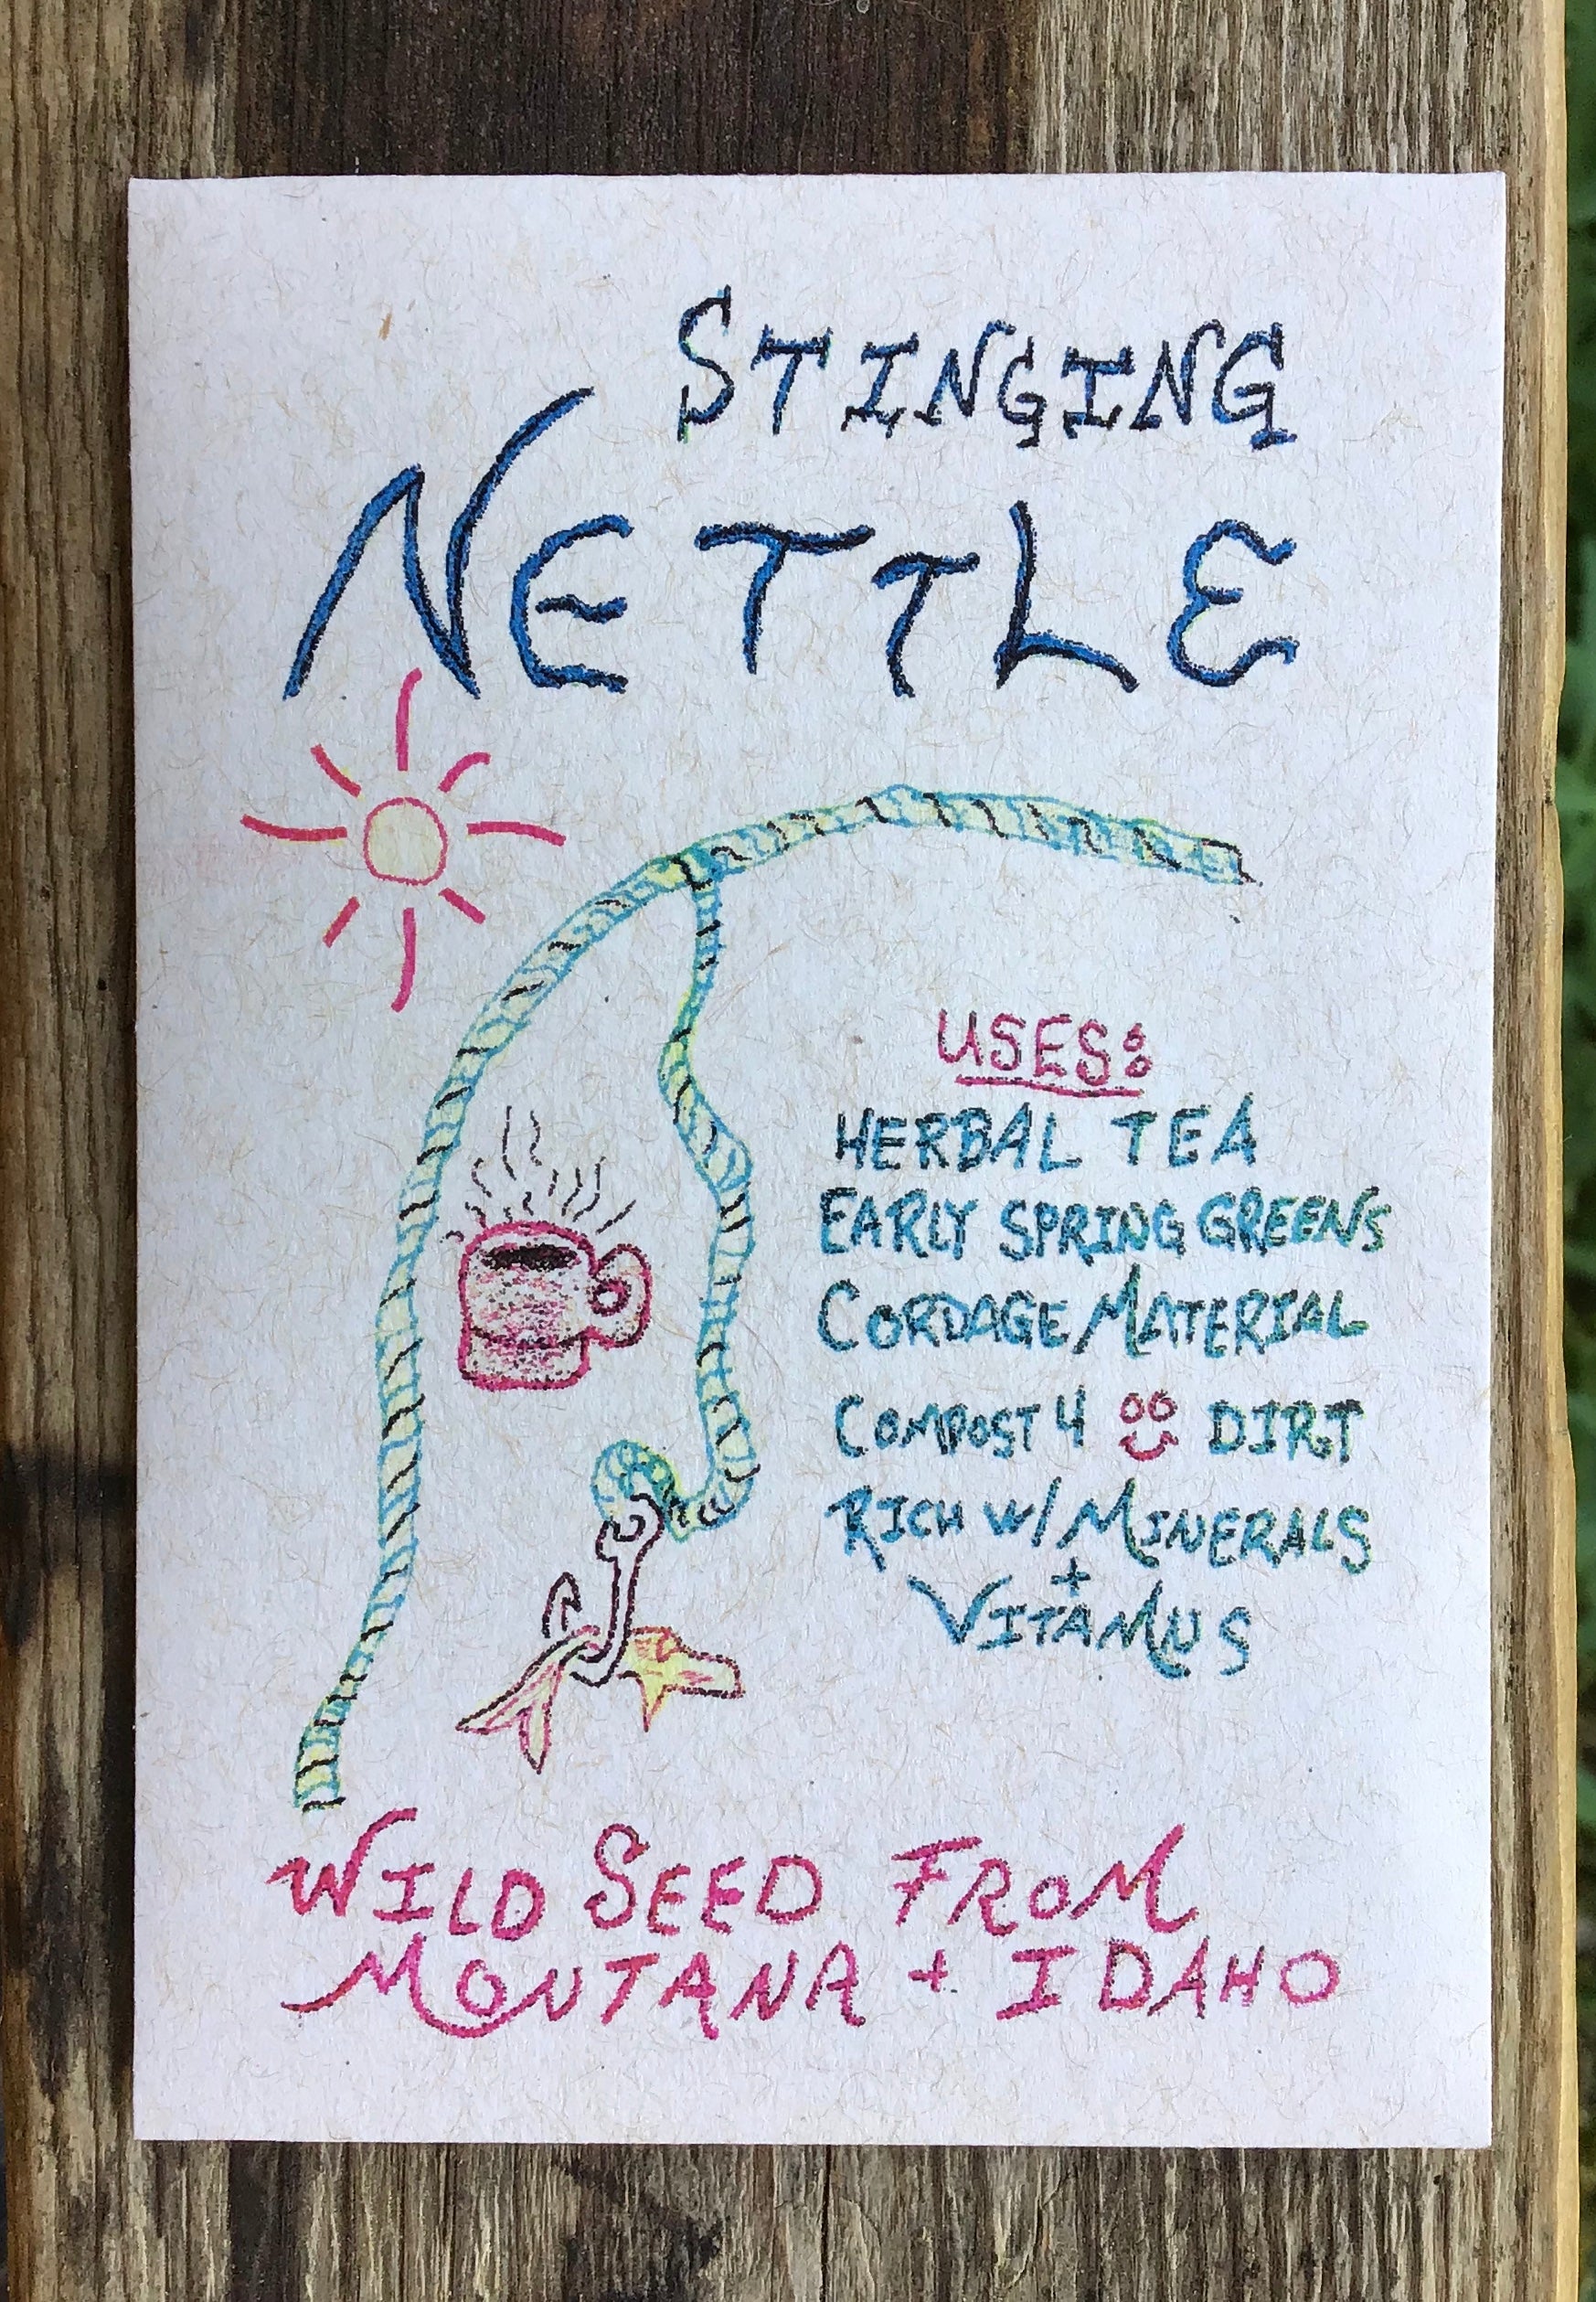 Stinging Nettle - Montana Field Guide